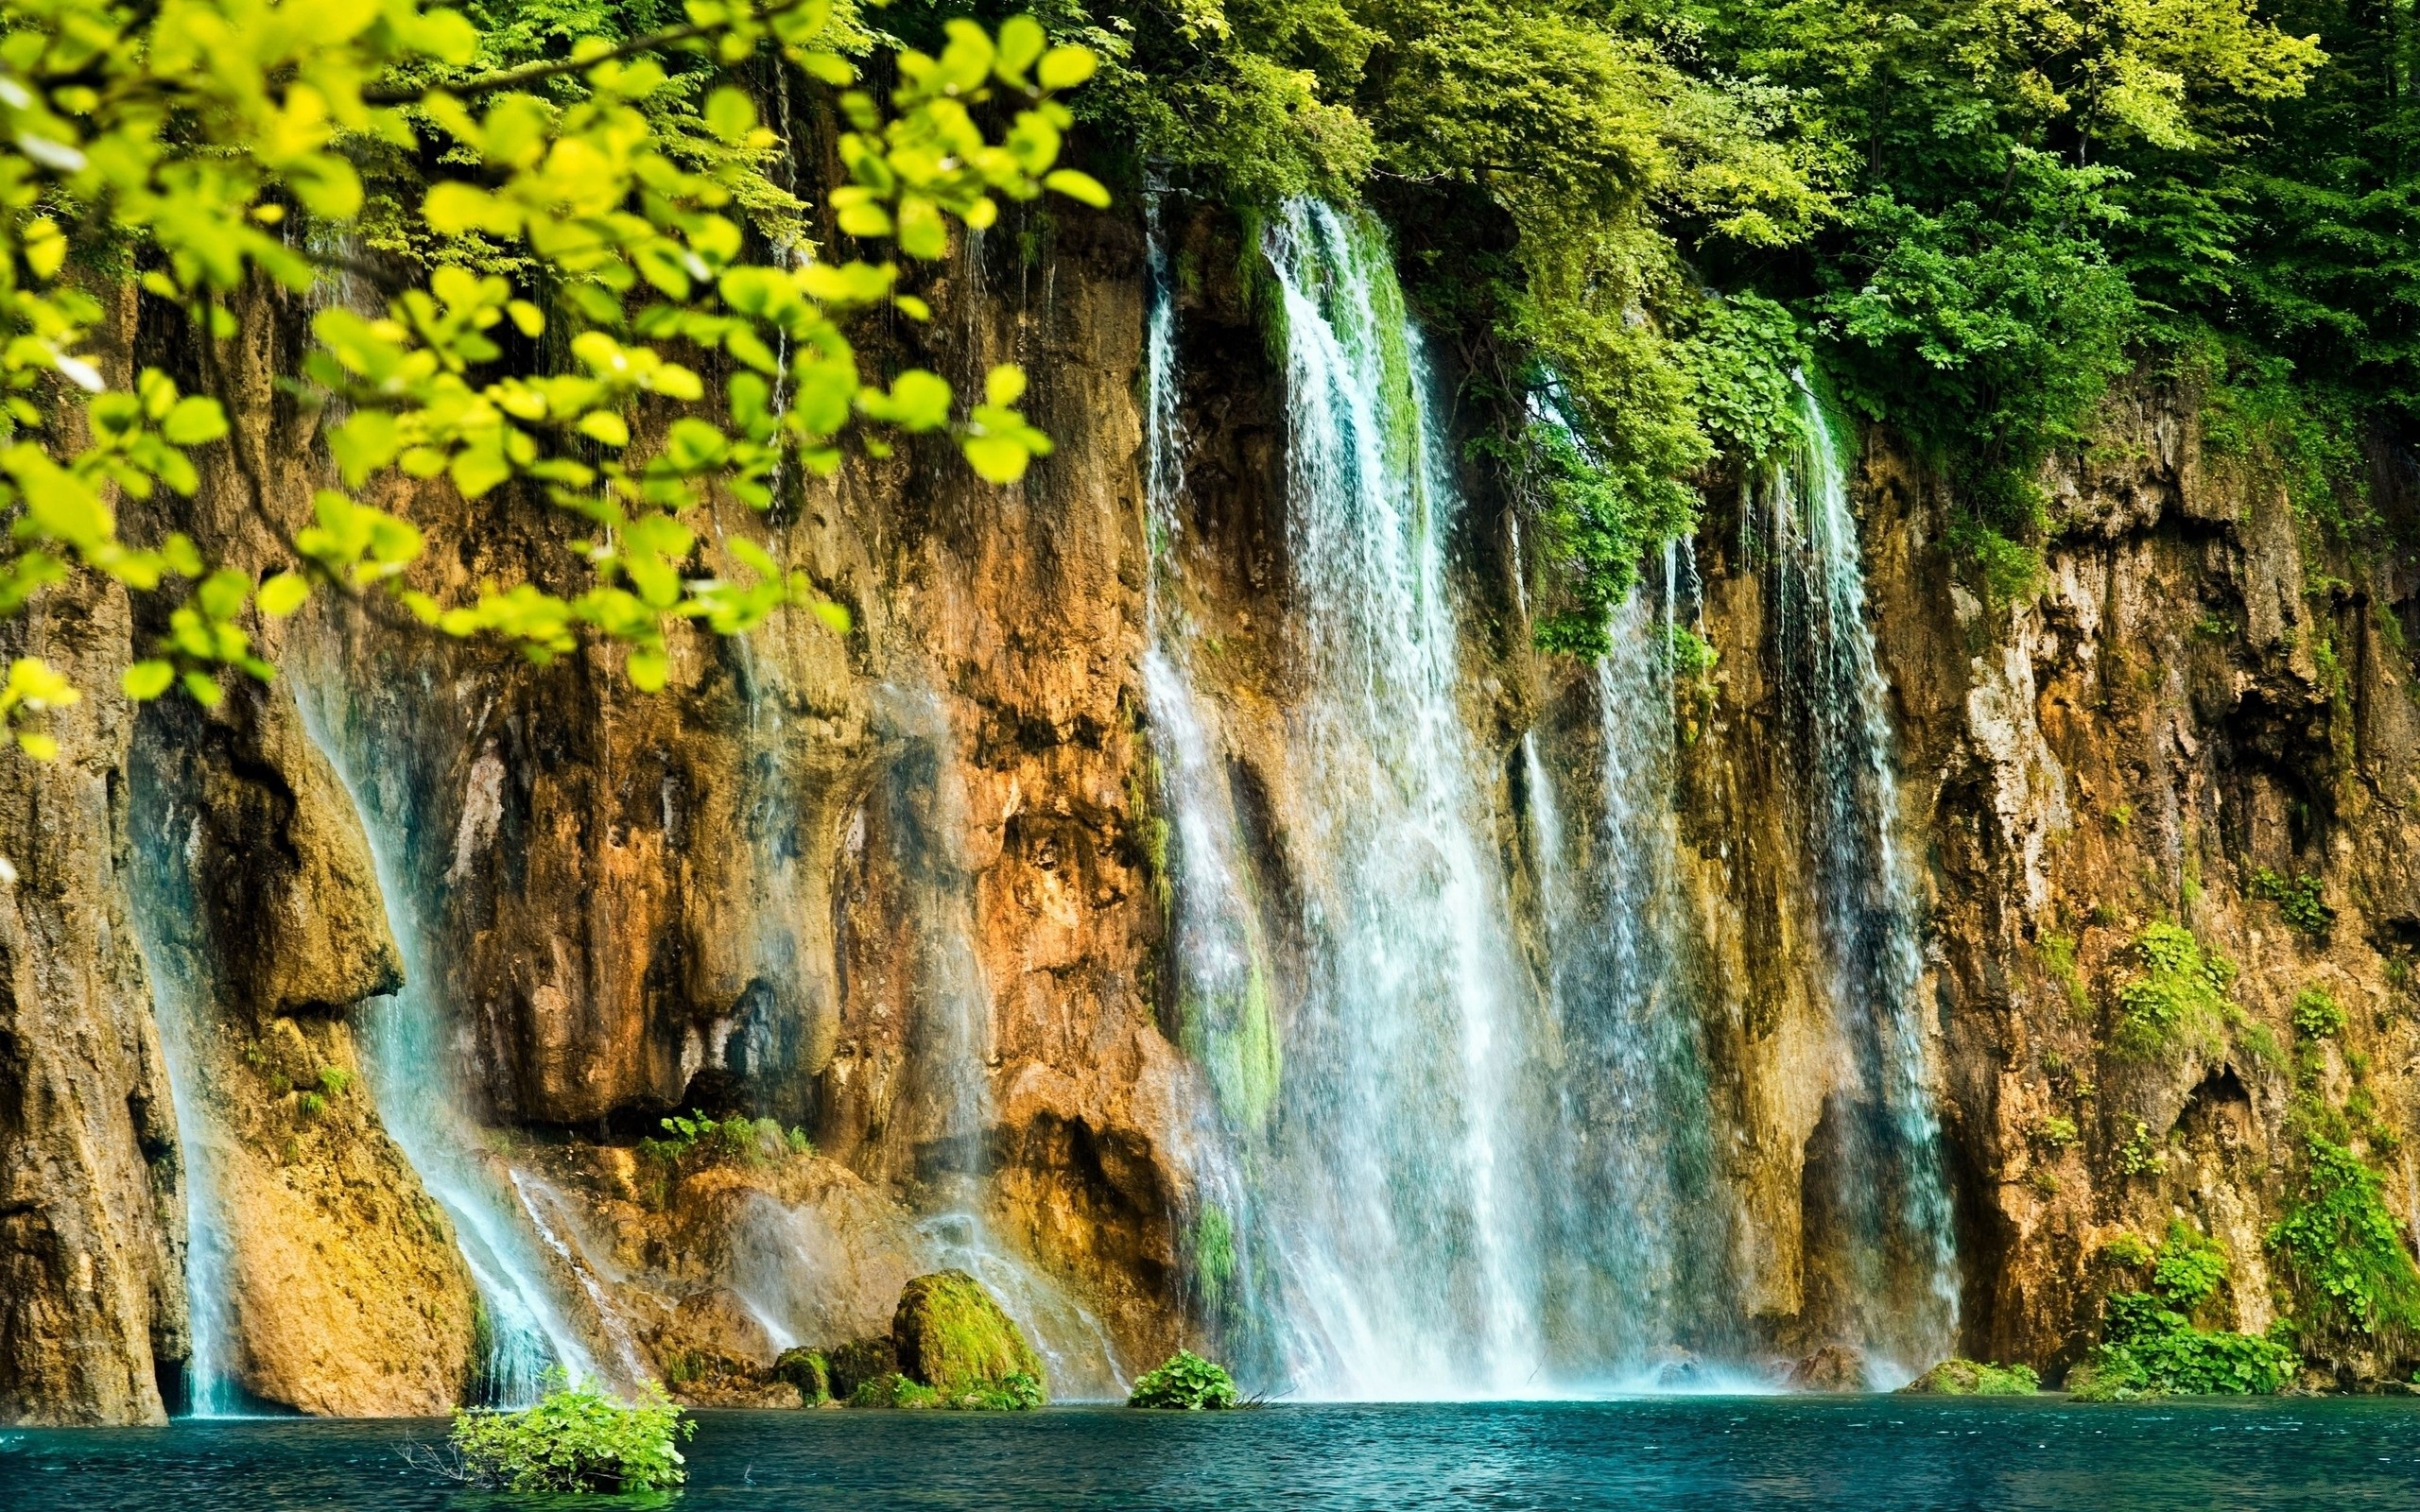 landscapes, waterfalls - desktop wallpaper